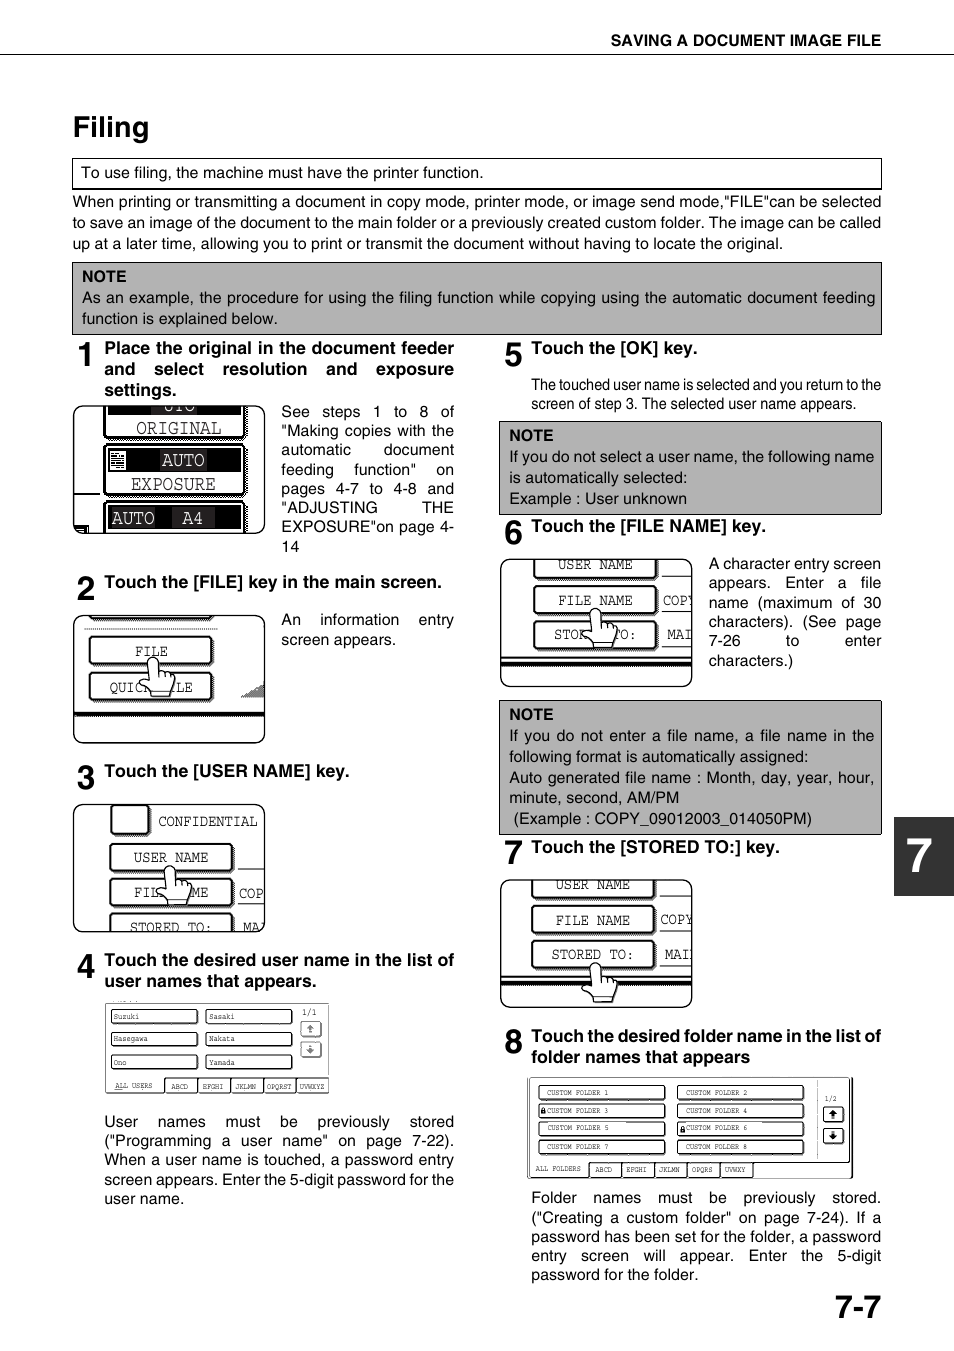 Filing, Uto auto auto a4 original exposure | Sharp AR-M700N User Manual | Page 141 / 172